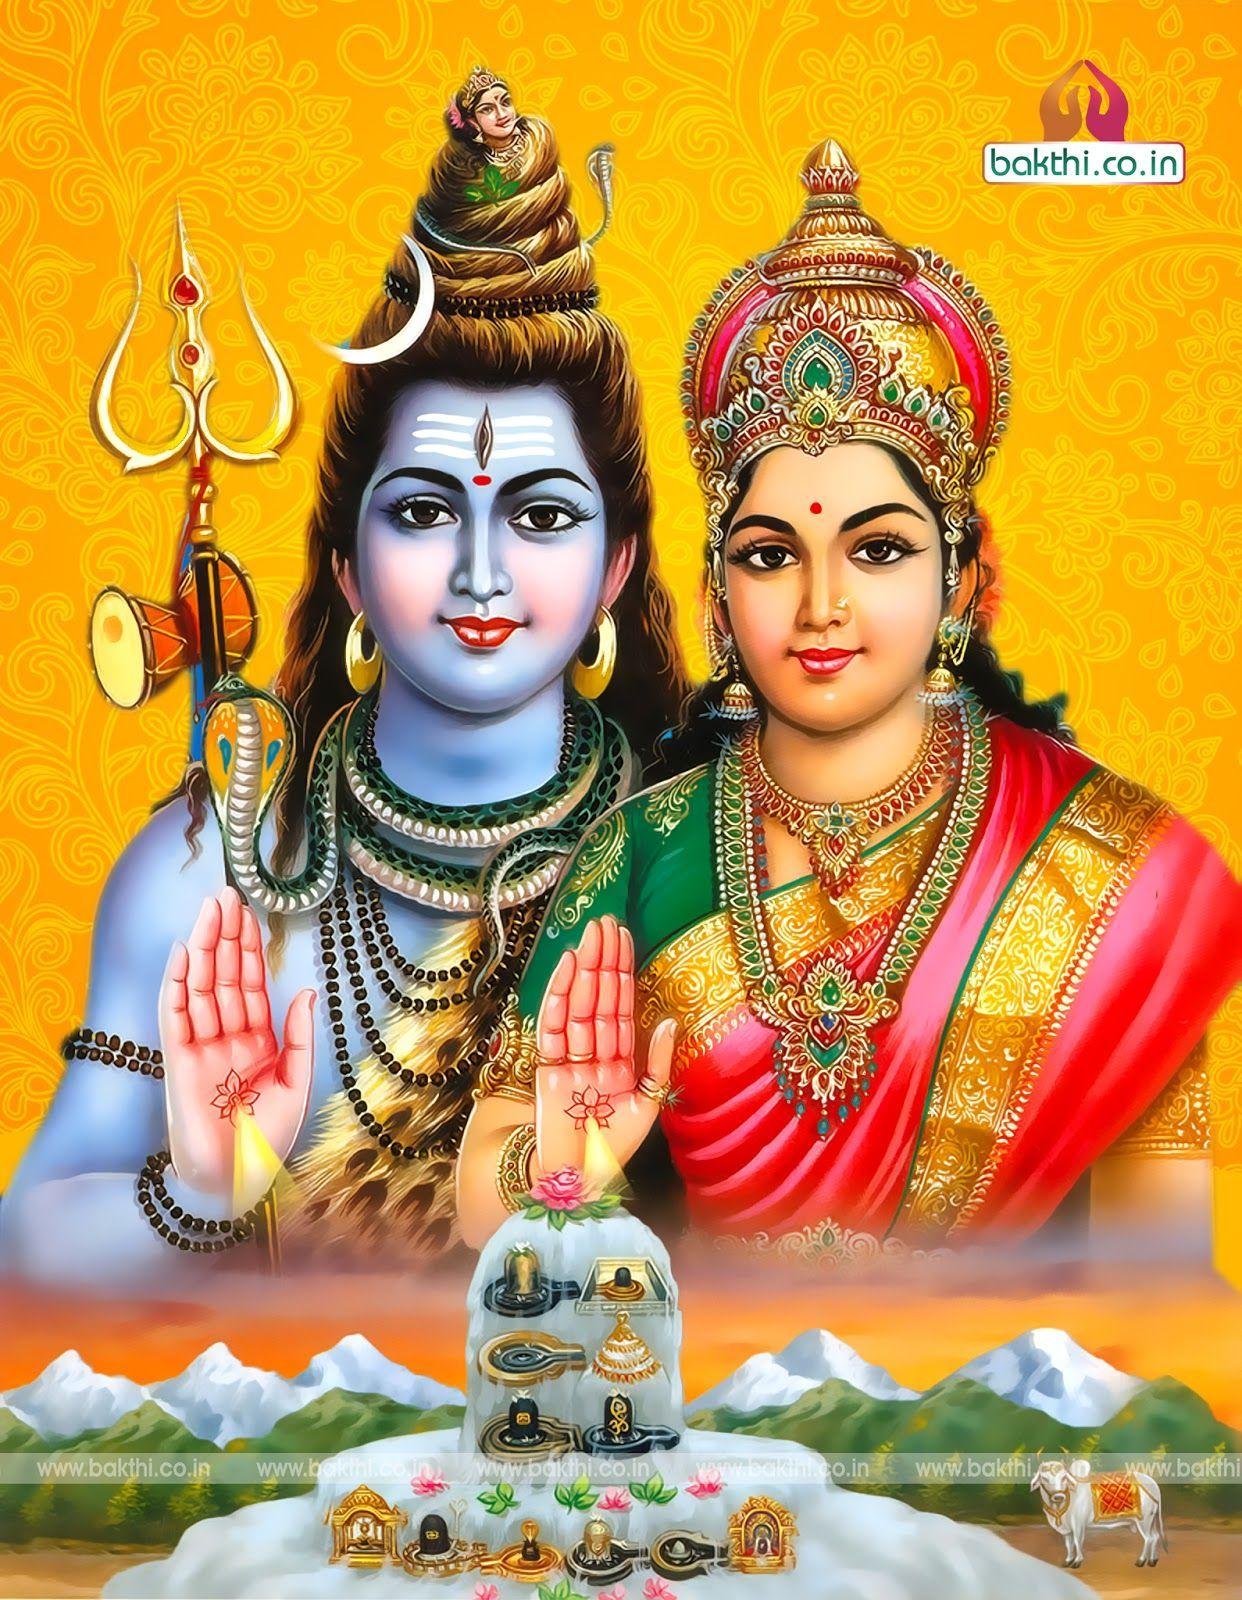 Shiva Parvati Wallpapers - Top Free Shiva Parvati Backgrounds -  WallpaperAccess